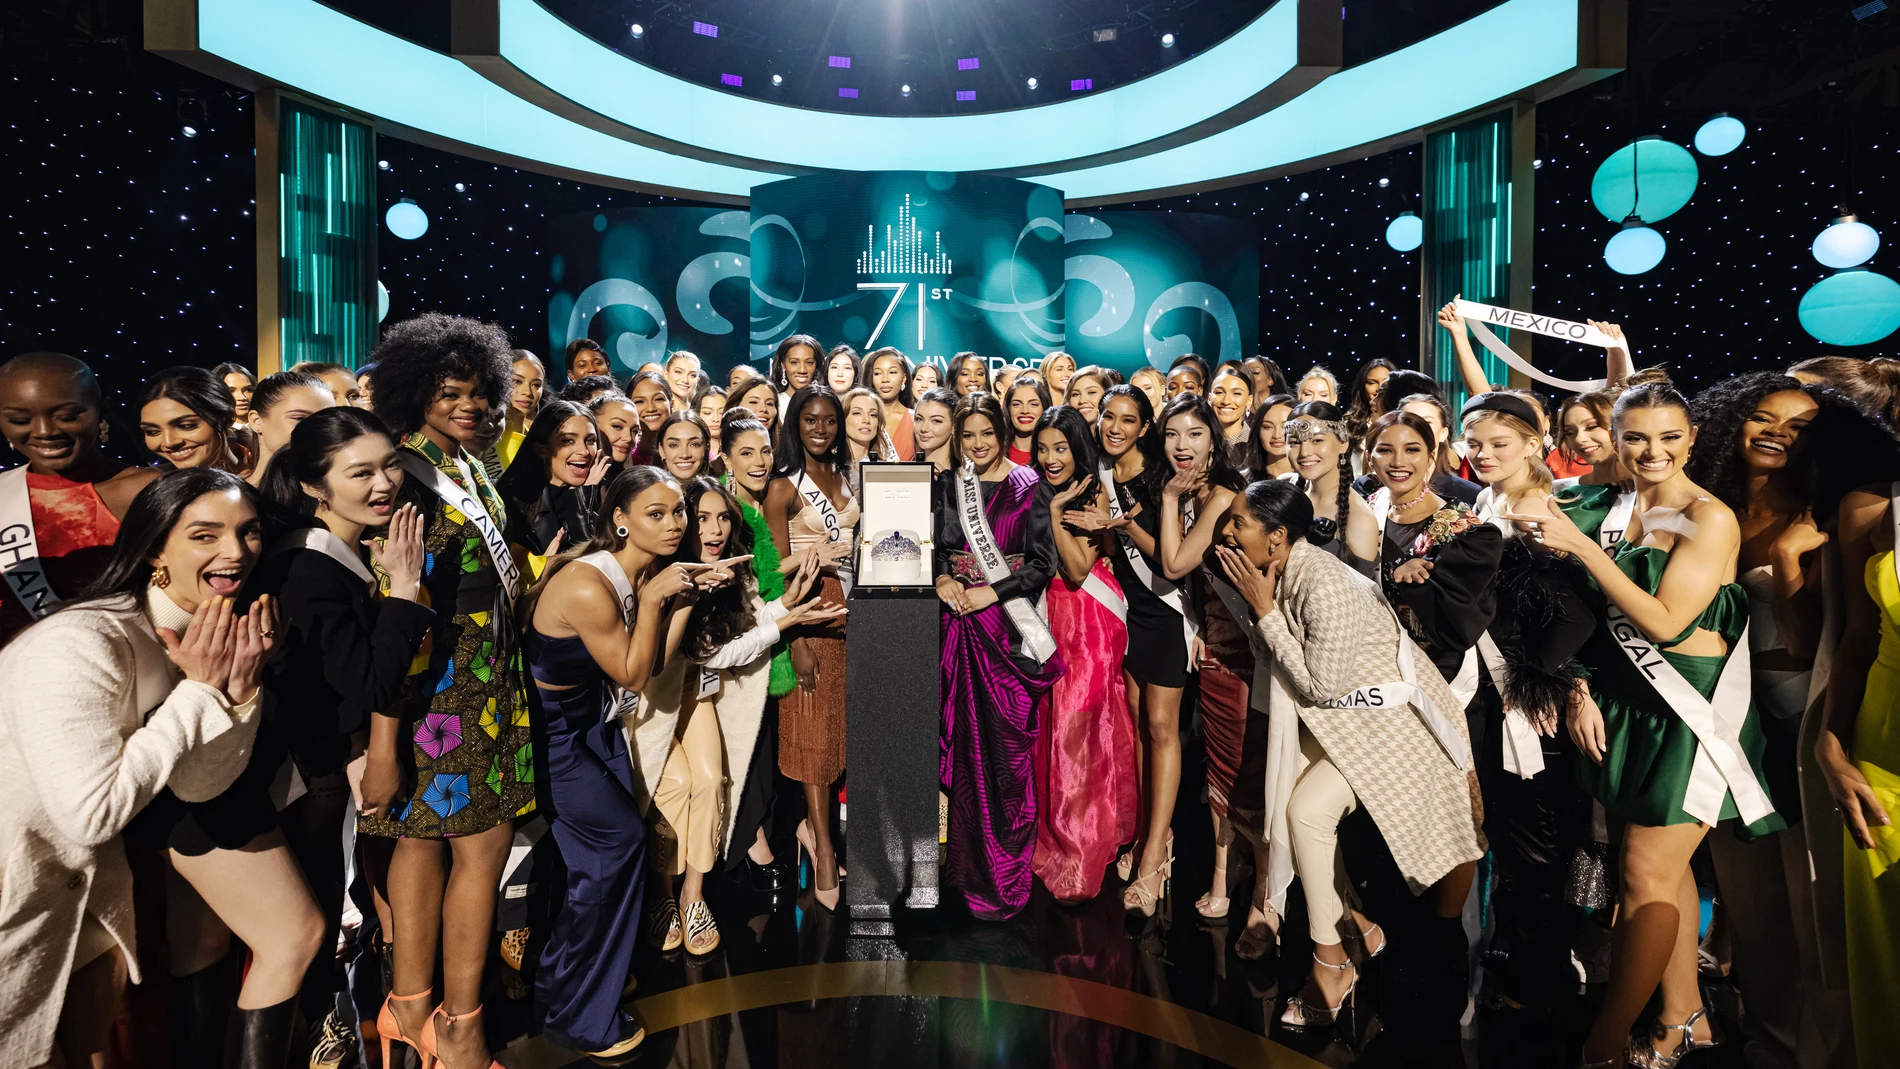 Las concursantes de Miss Universo posan junto a la corona